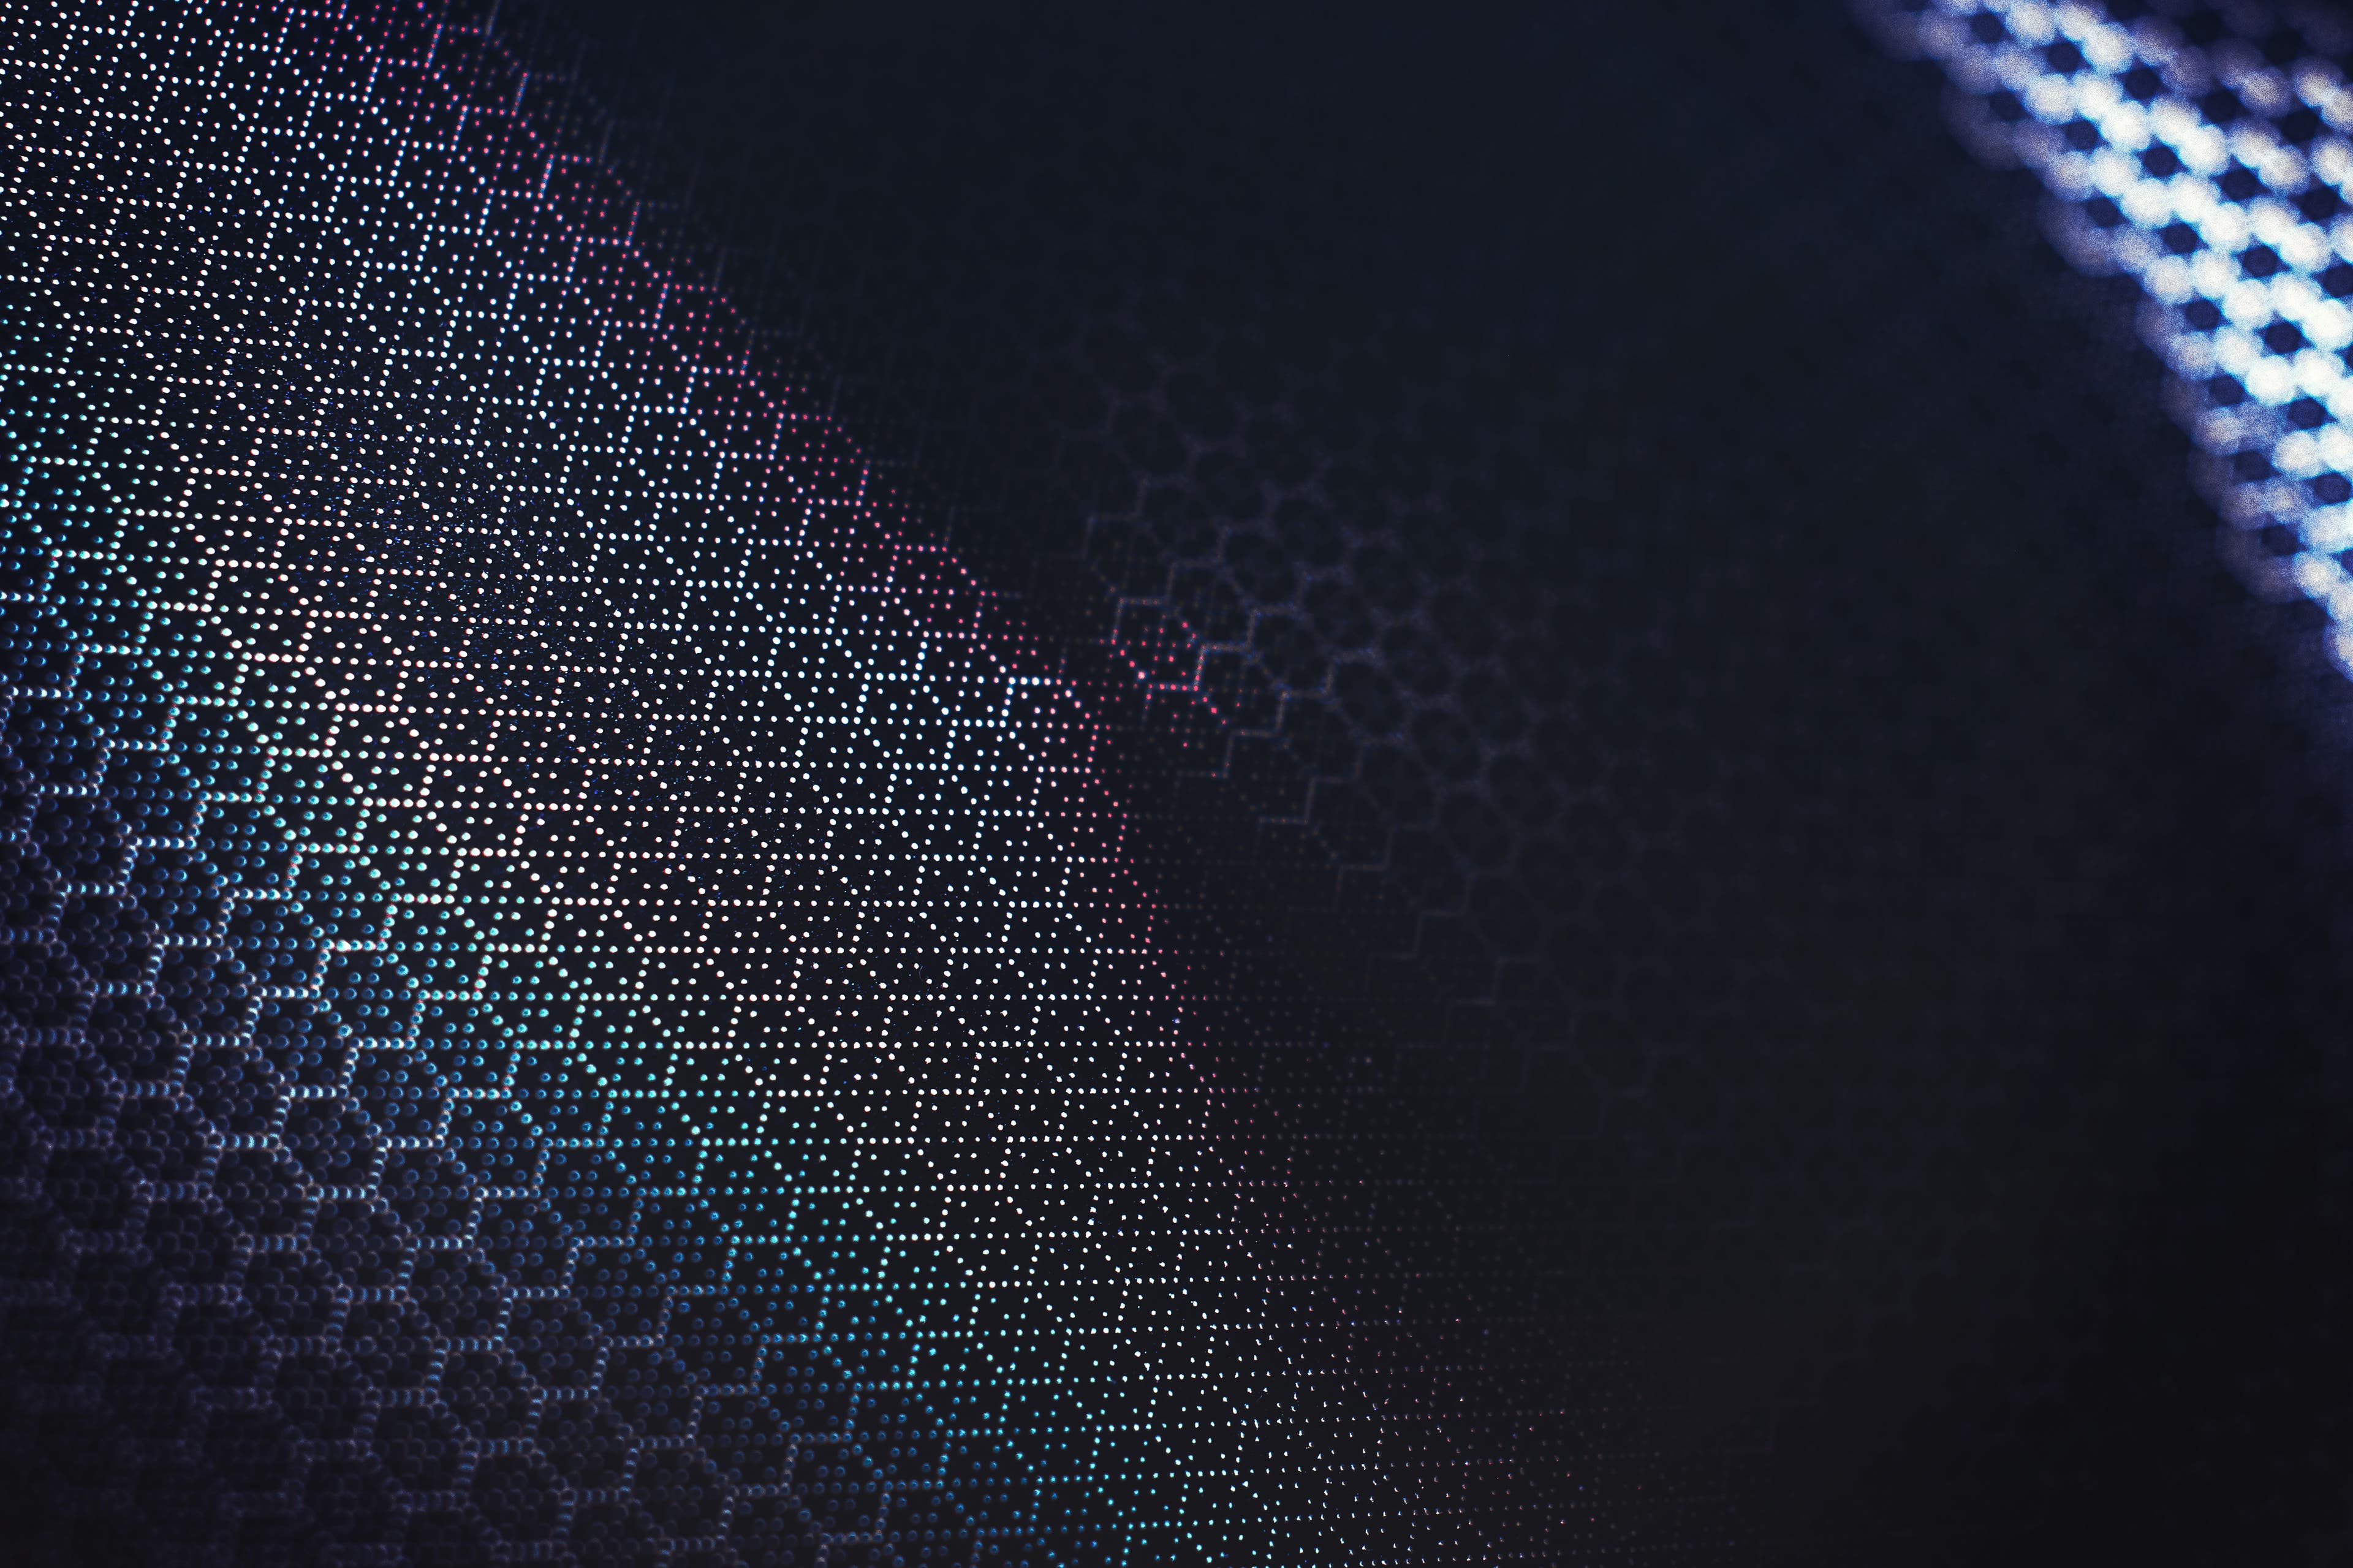 Hexagon honeycomb graphic